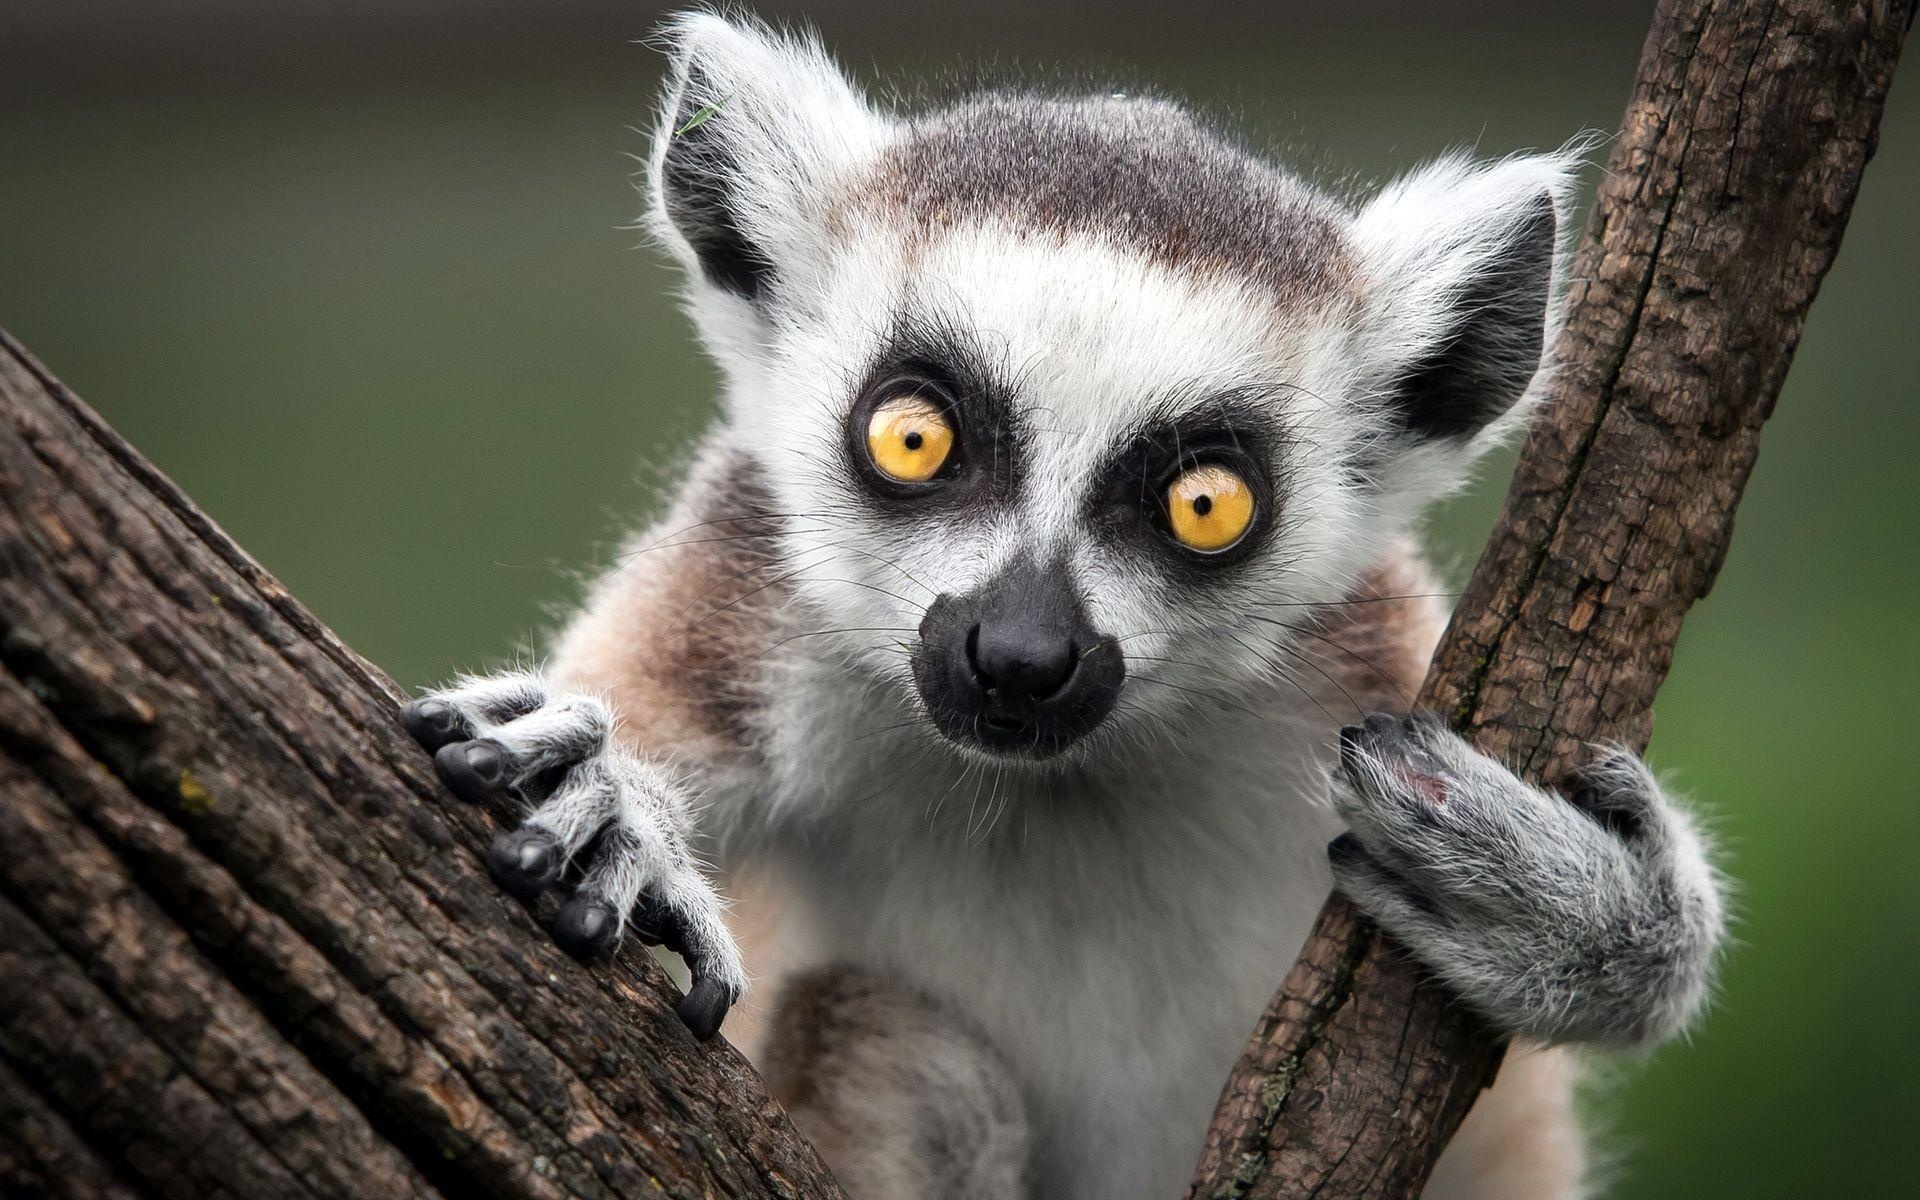 Cute lemur, Playful antics, Adorable expression, Lively background, 1920x1200 HD Desktop